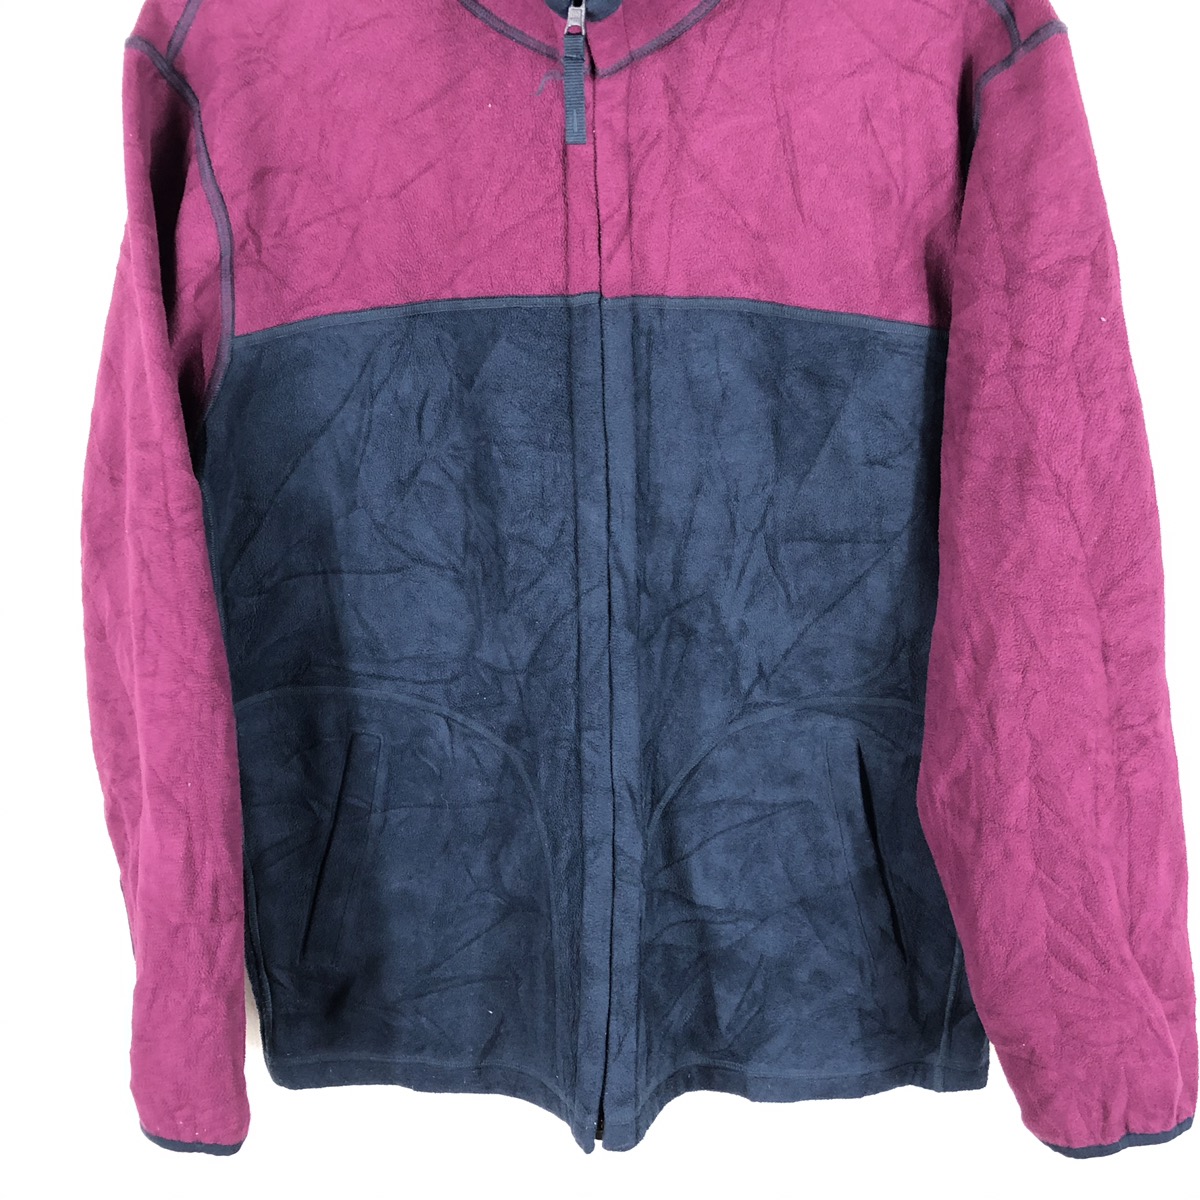 Uniqlo - Two tone color uniqlo fleece jacket - 3